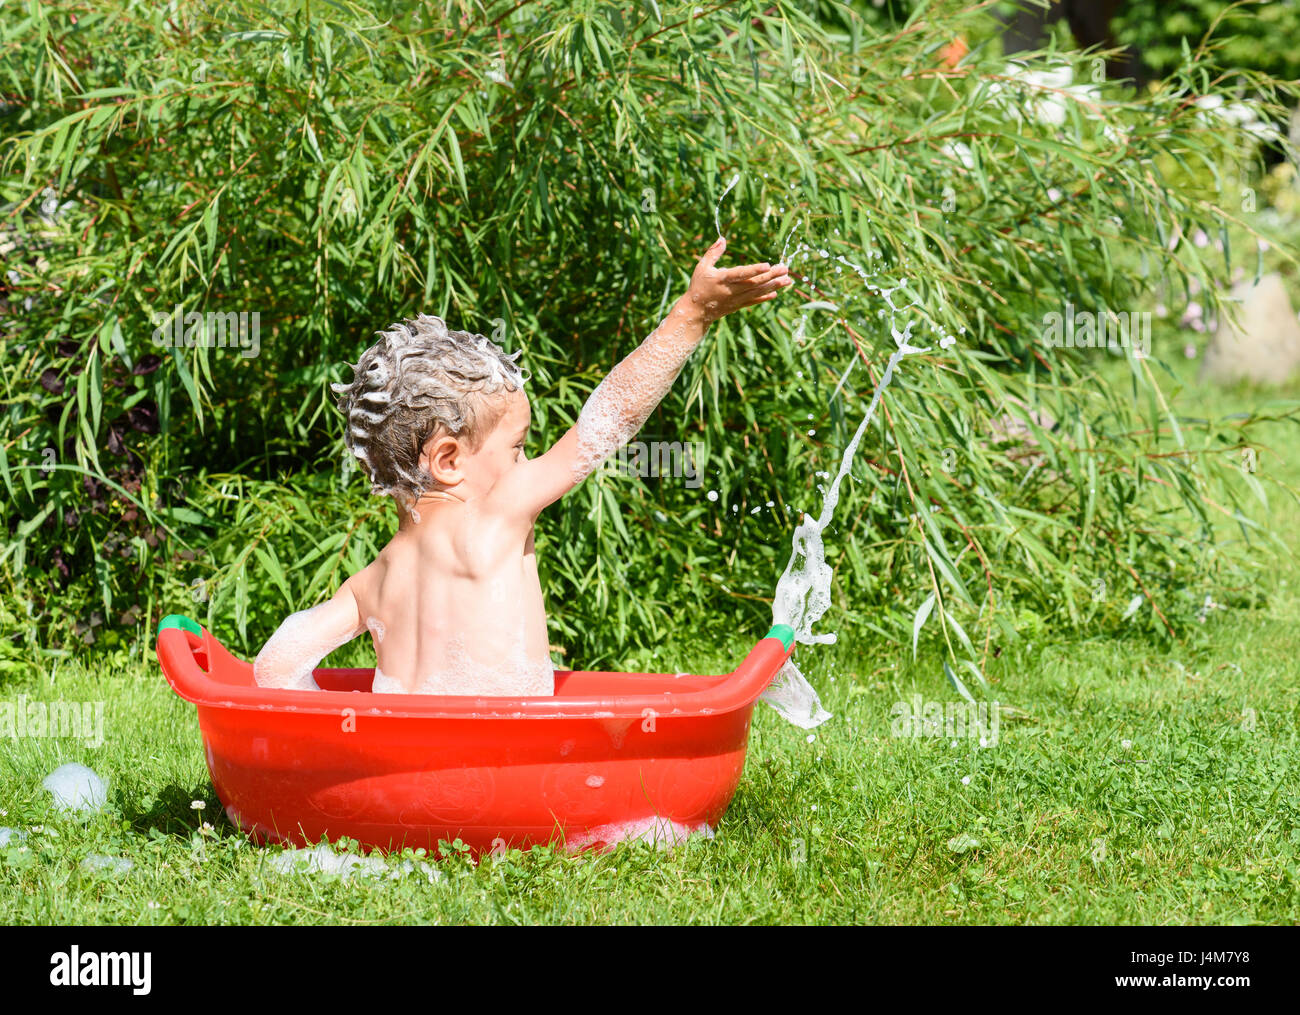 Preschooler boy taking bath outdoors playing with suds foam in washing basin Stock Photo